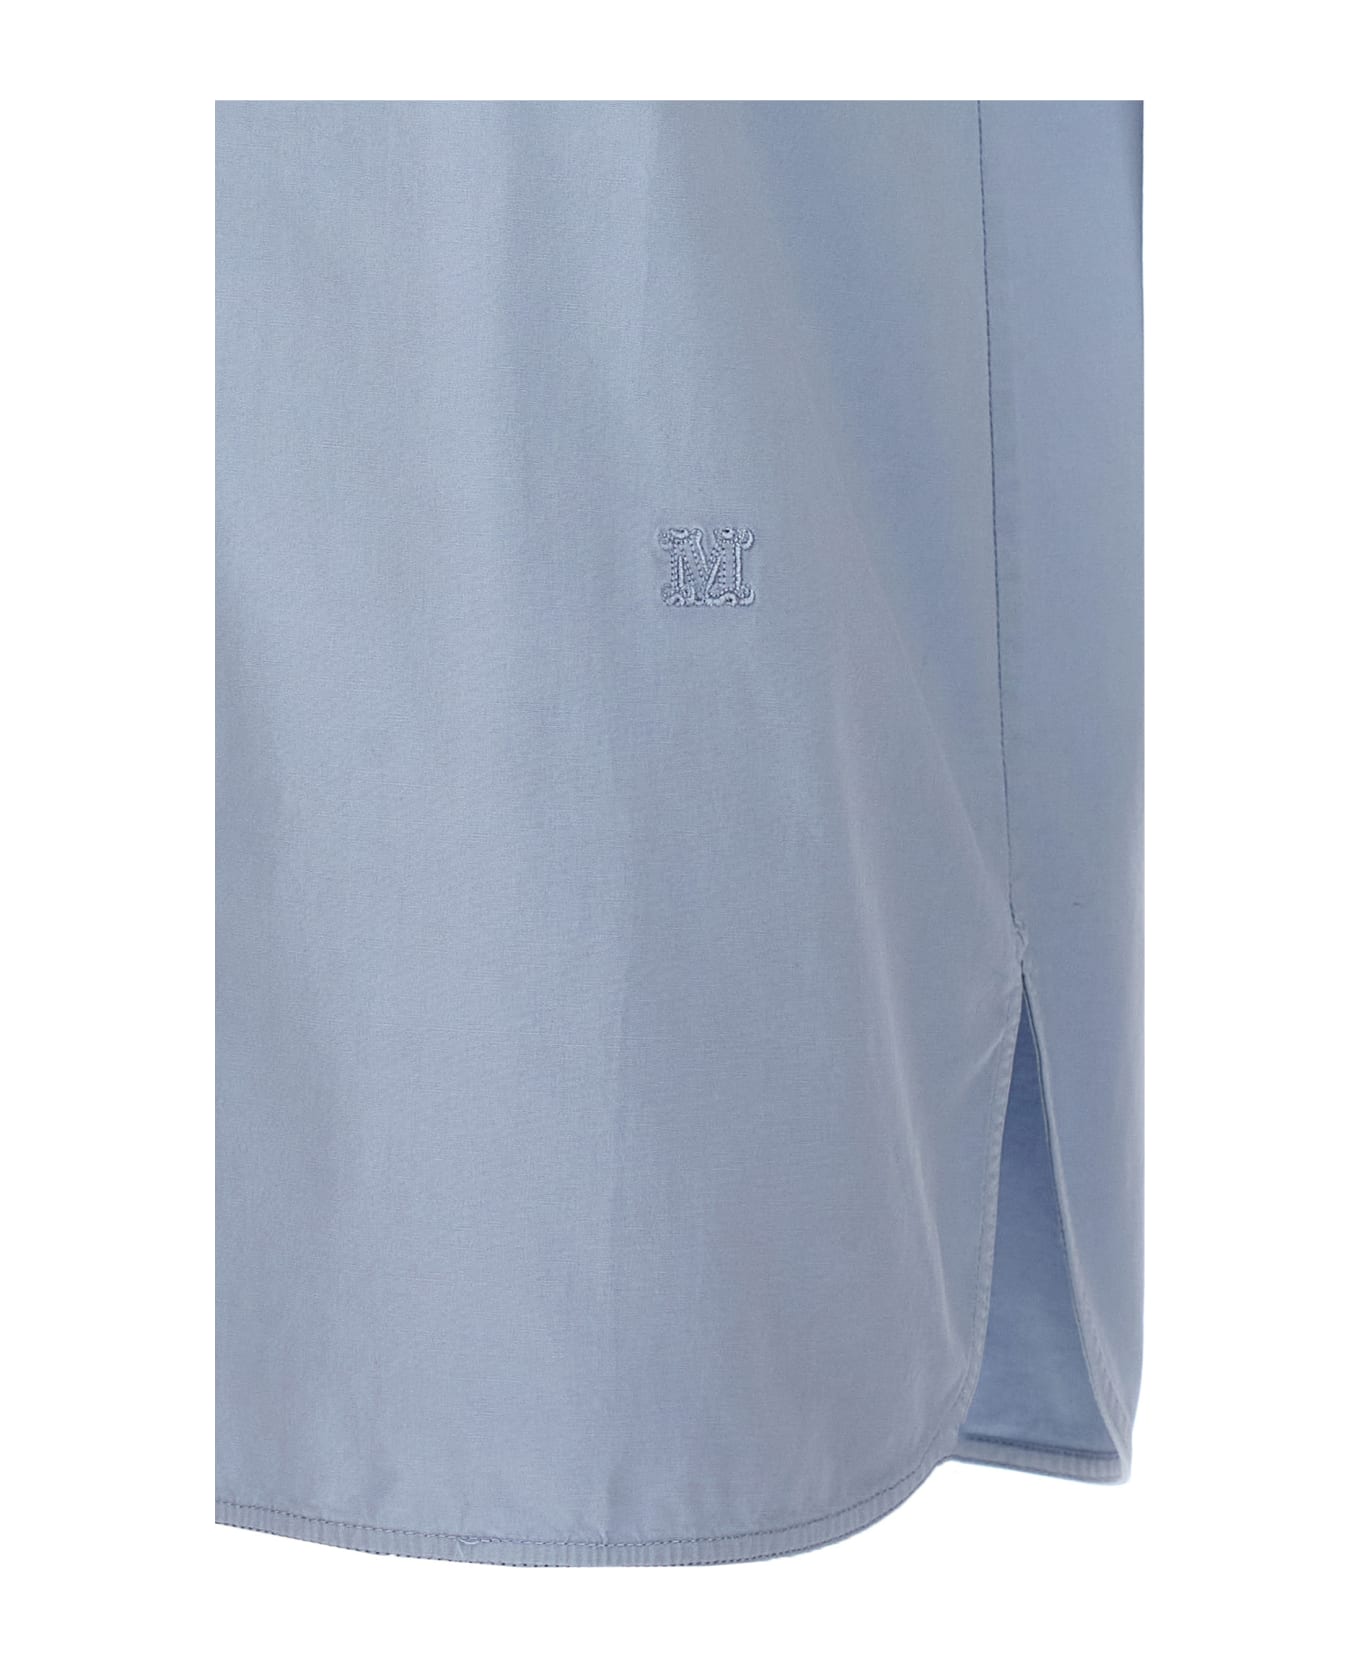 Max Mara 'adunco' Shirt - Light Blue シャツ